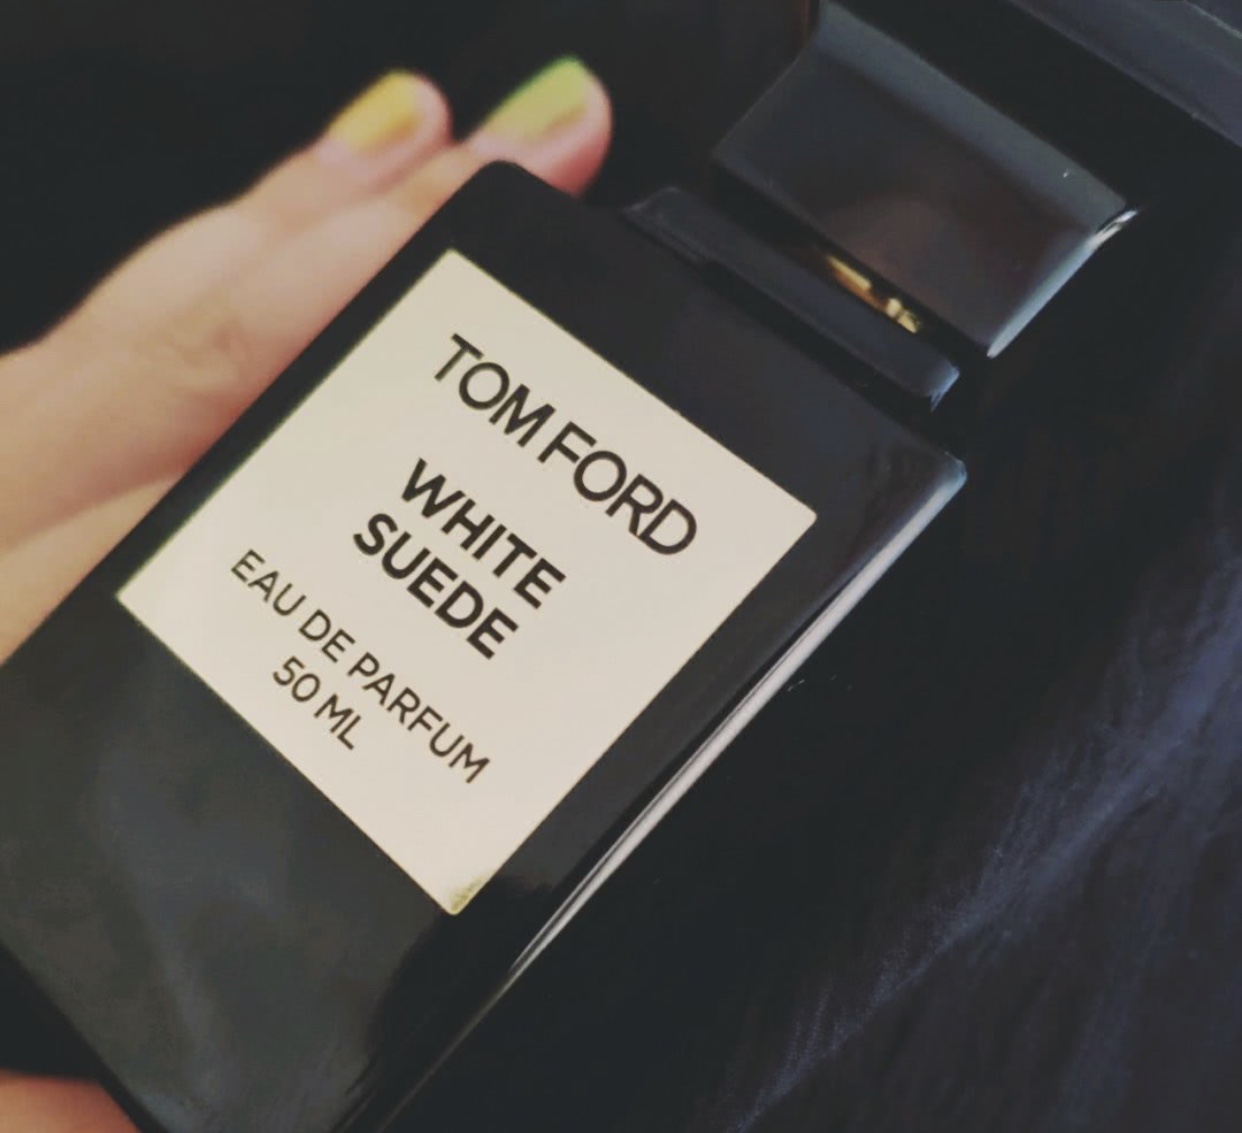 👑 L&G 💄 Tom Ford white suede nước hoa da lộn trắng EDP Tester For Lady